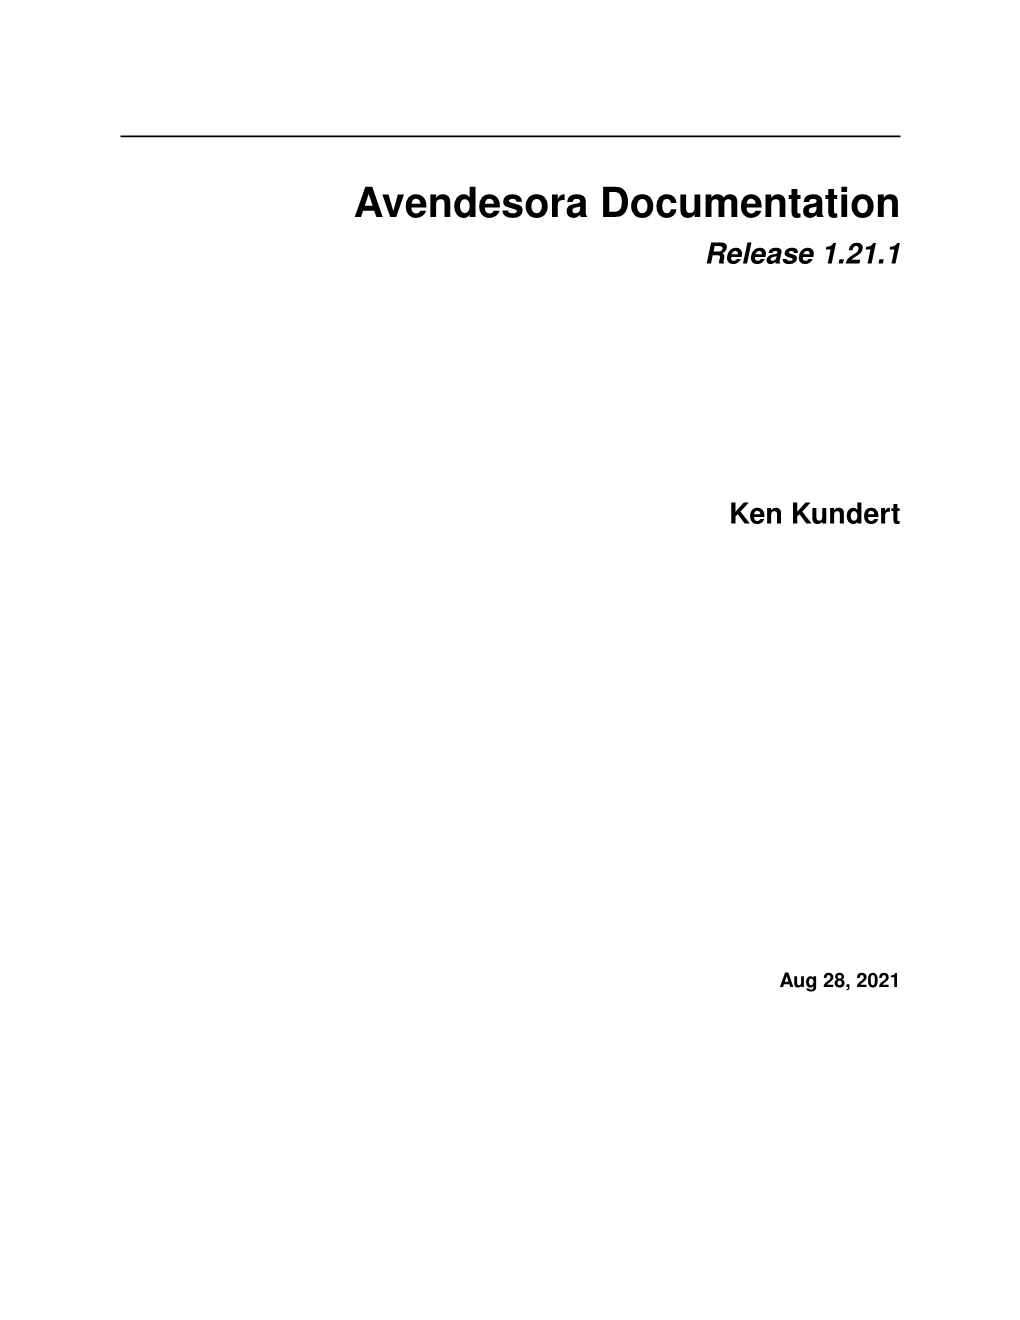 Avendesora Documentation Release 1.21.1